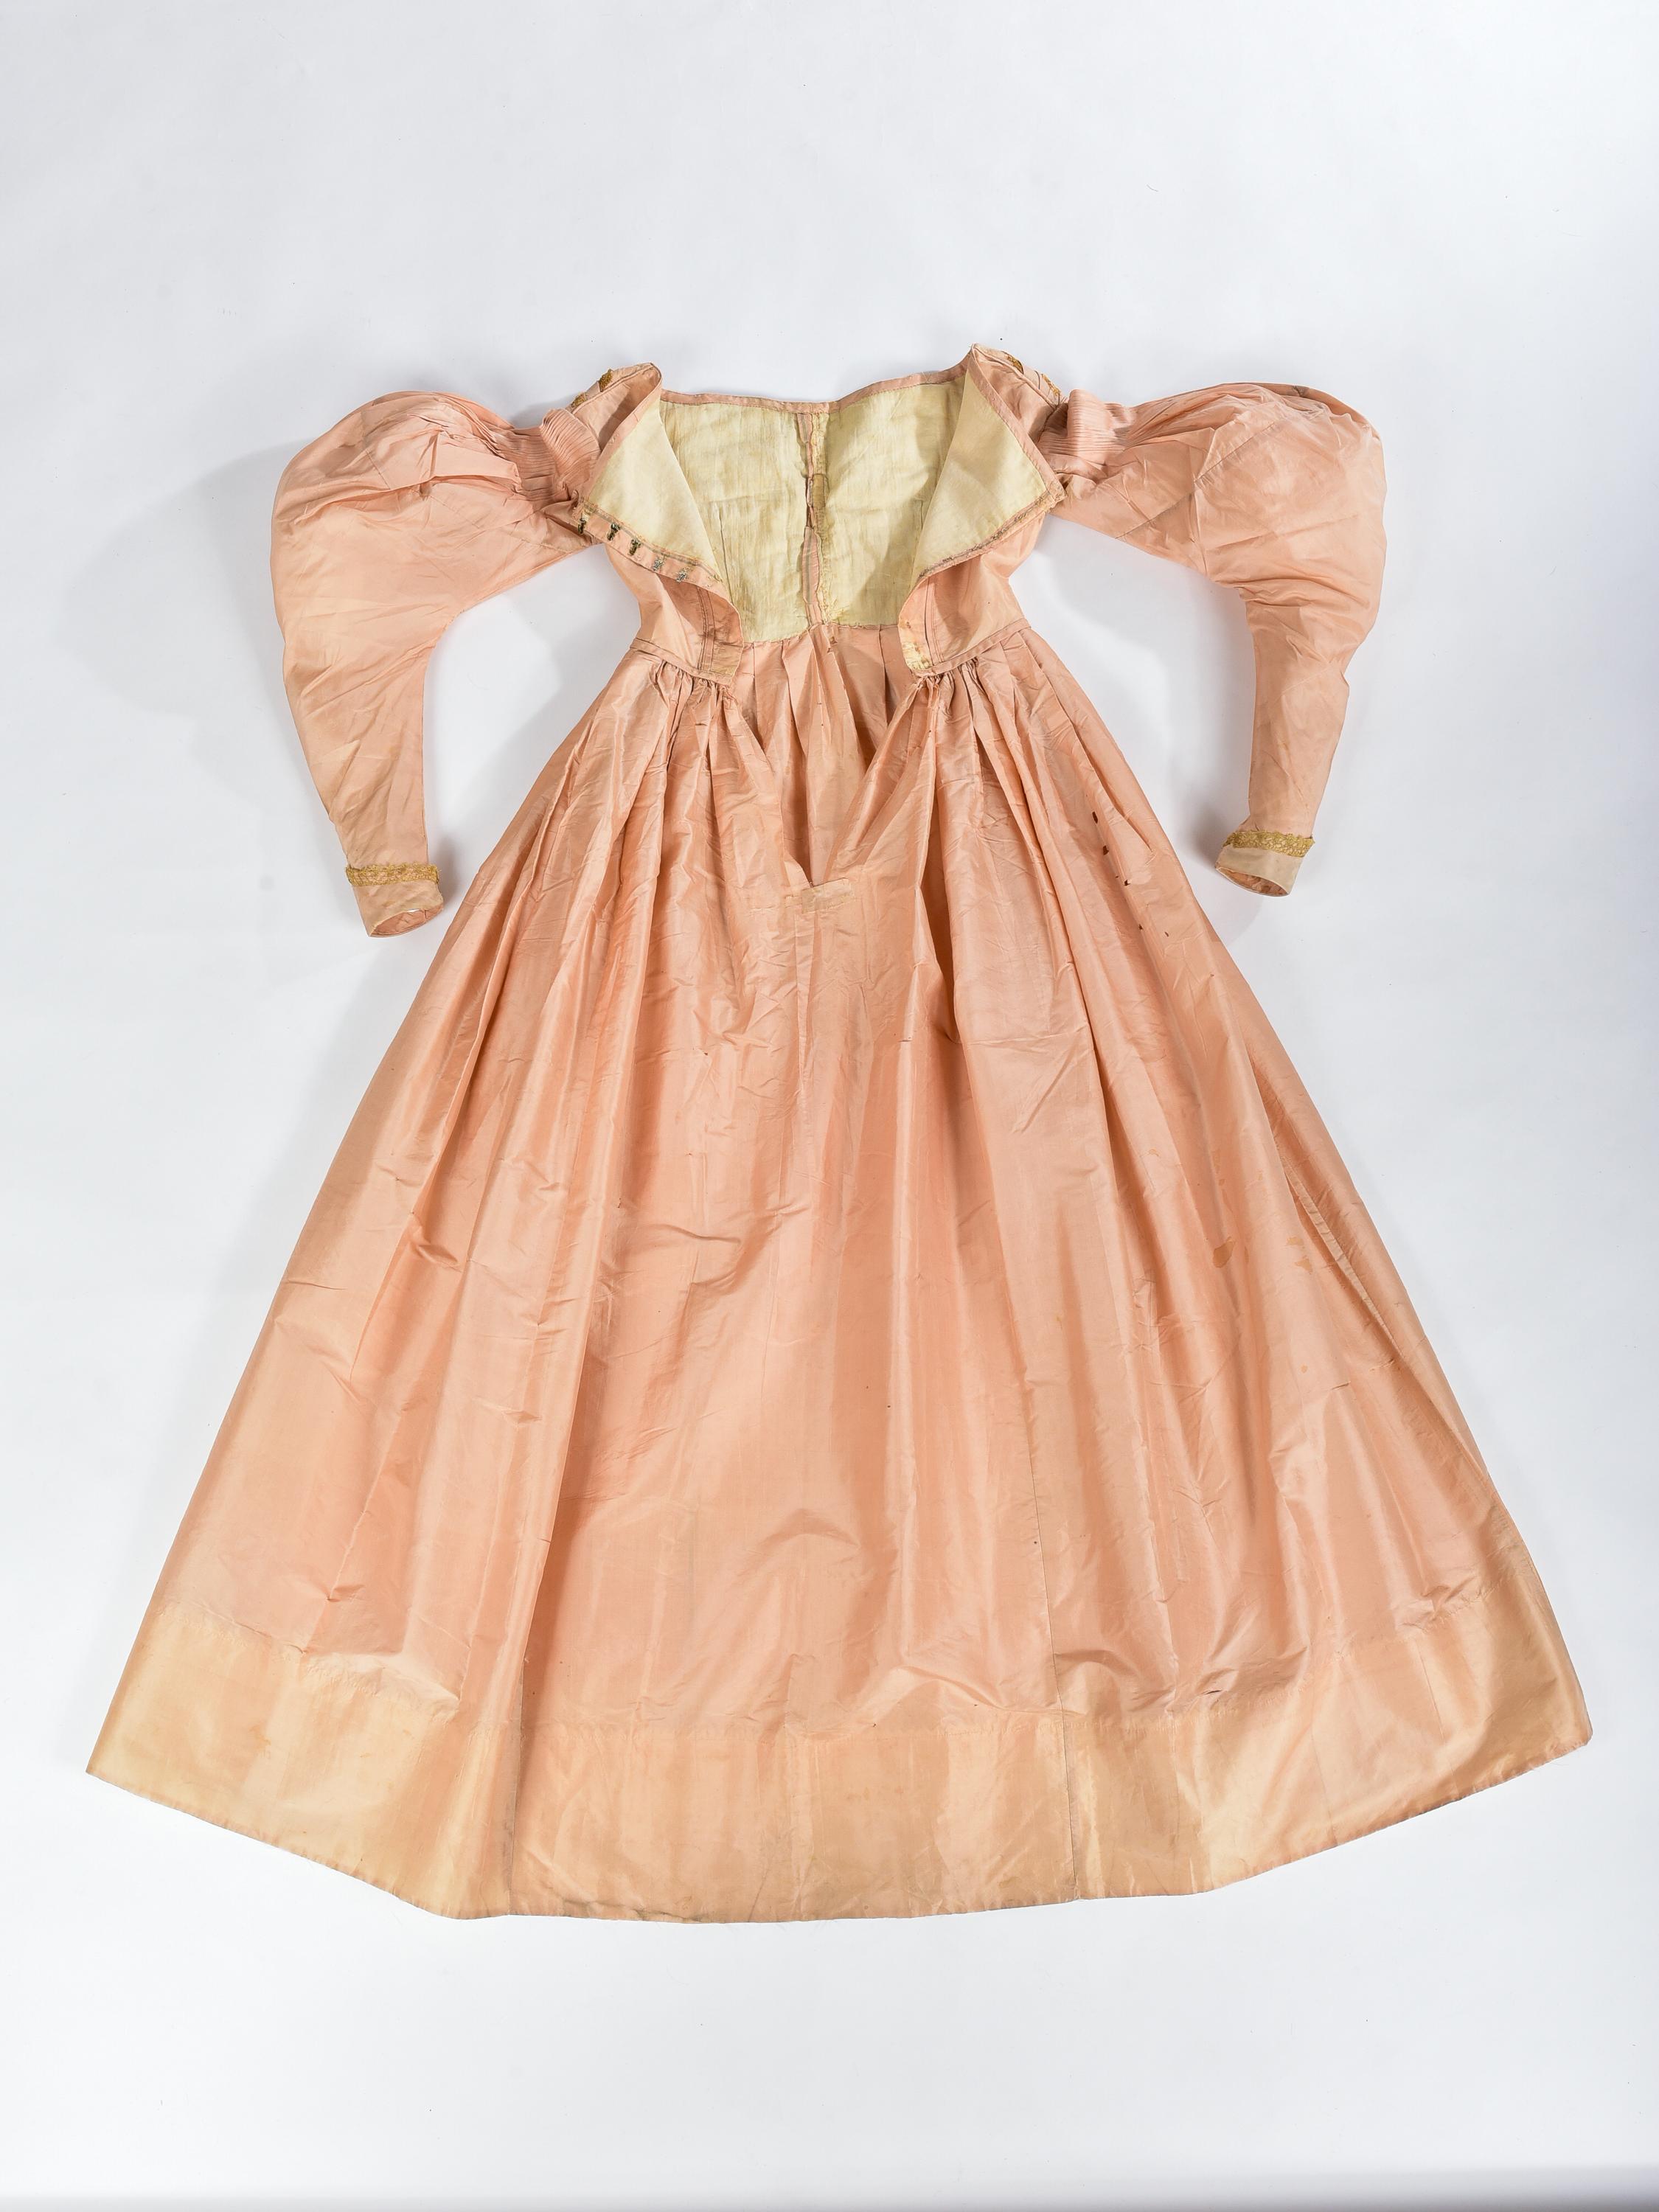 A French Romantic Period taffeta pale pink Taffeta Dress- France Circa 1835-1840 1